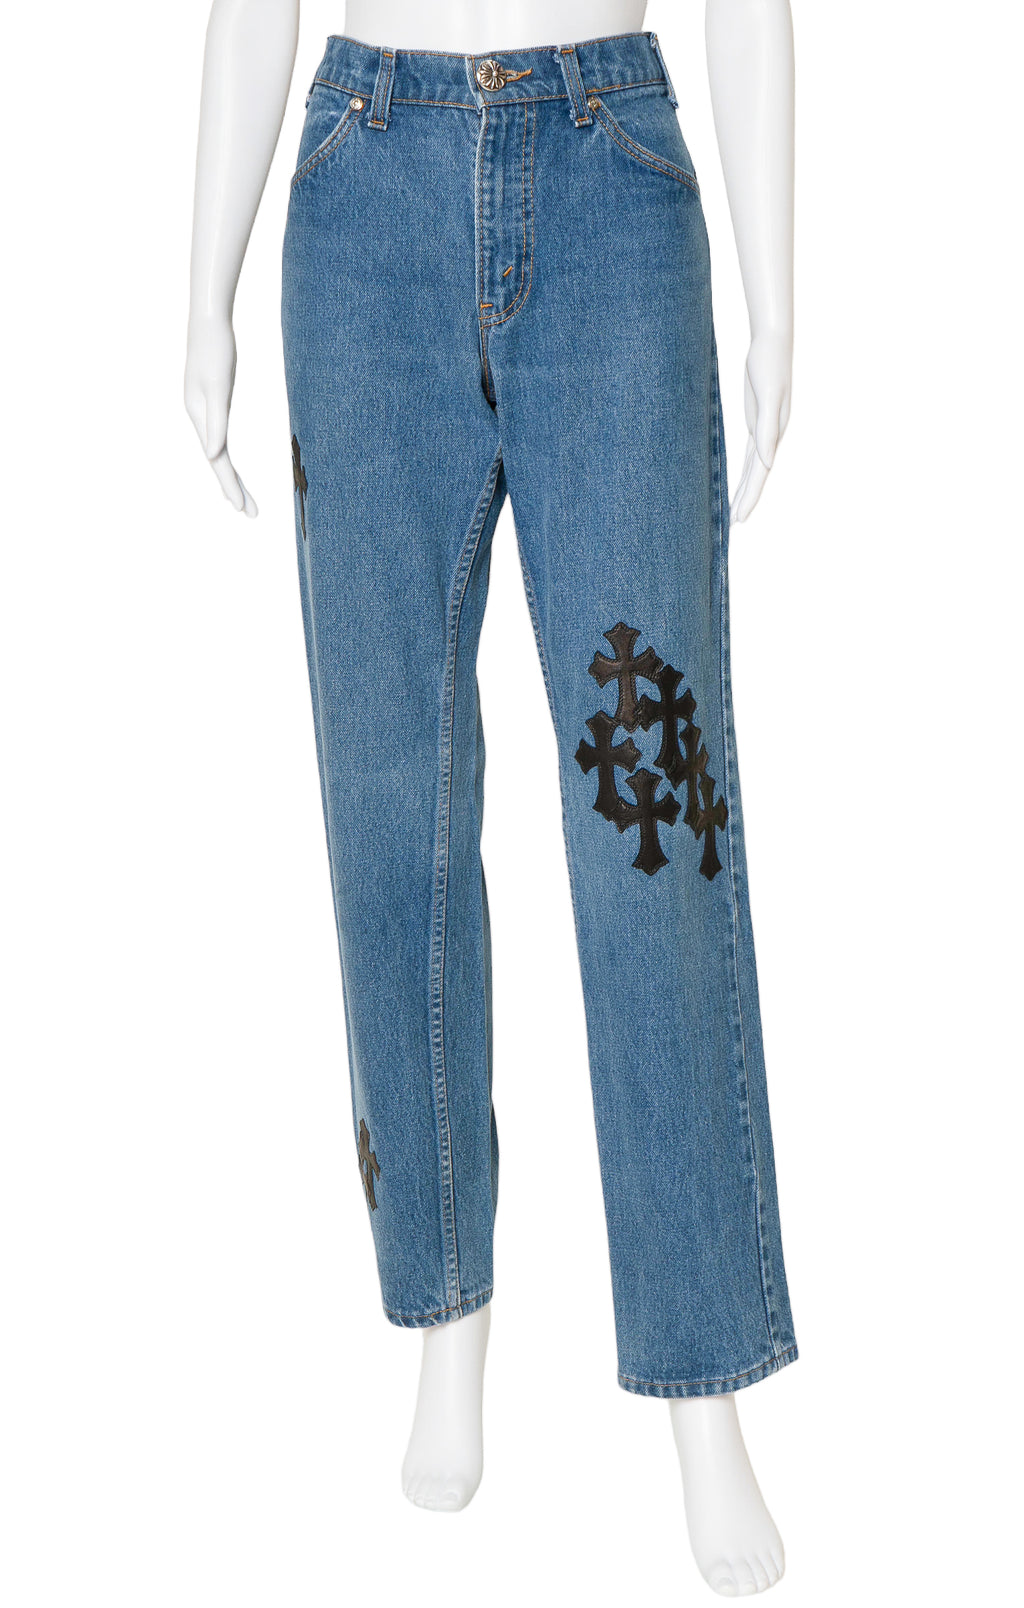 CHROME HEARTS x VINTAGE LEVI'S (RARE) Jeans Size: No size tags, fit like US 30/10